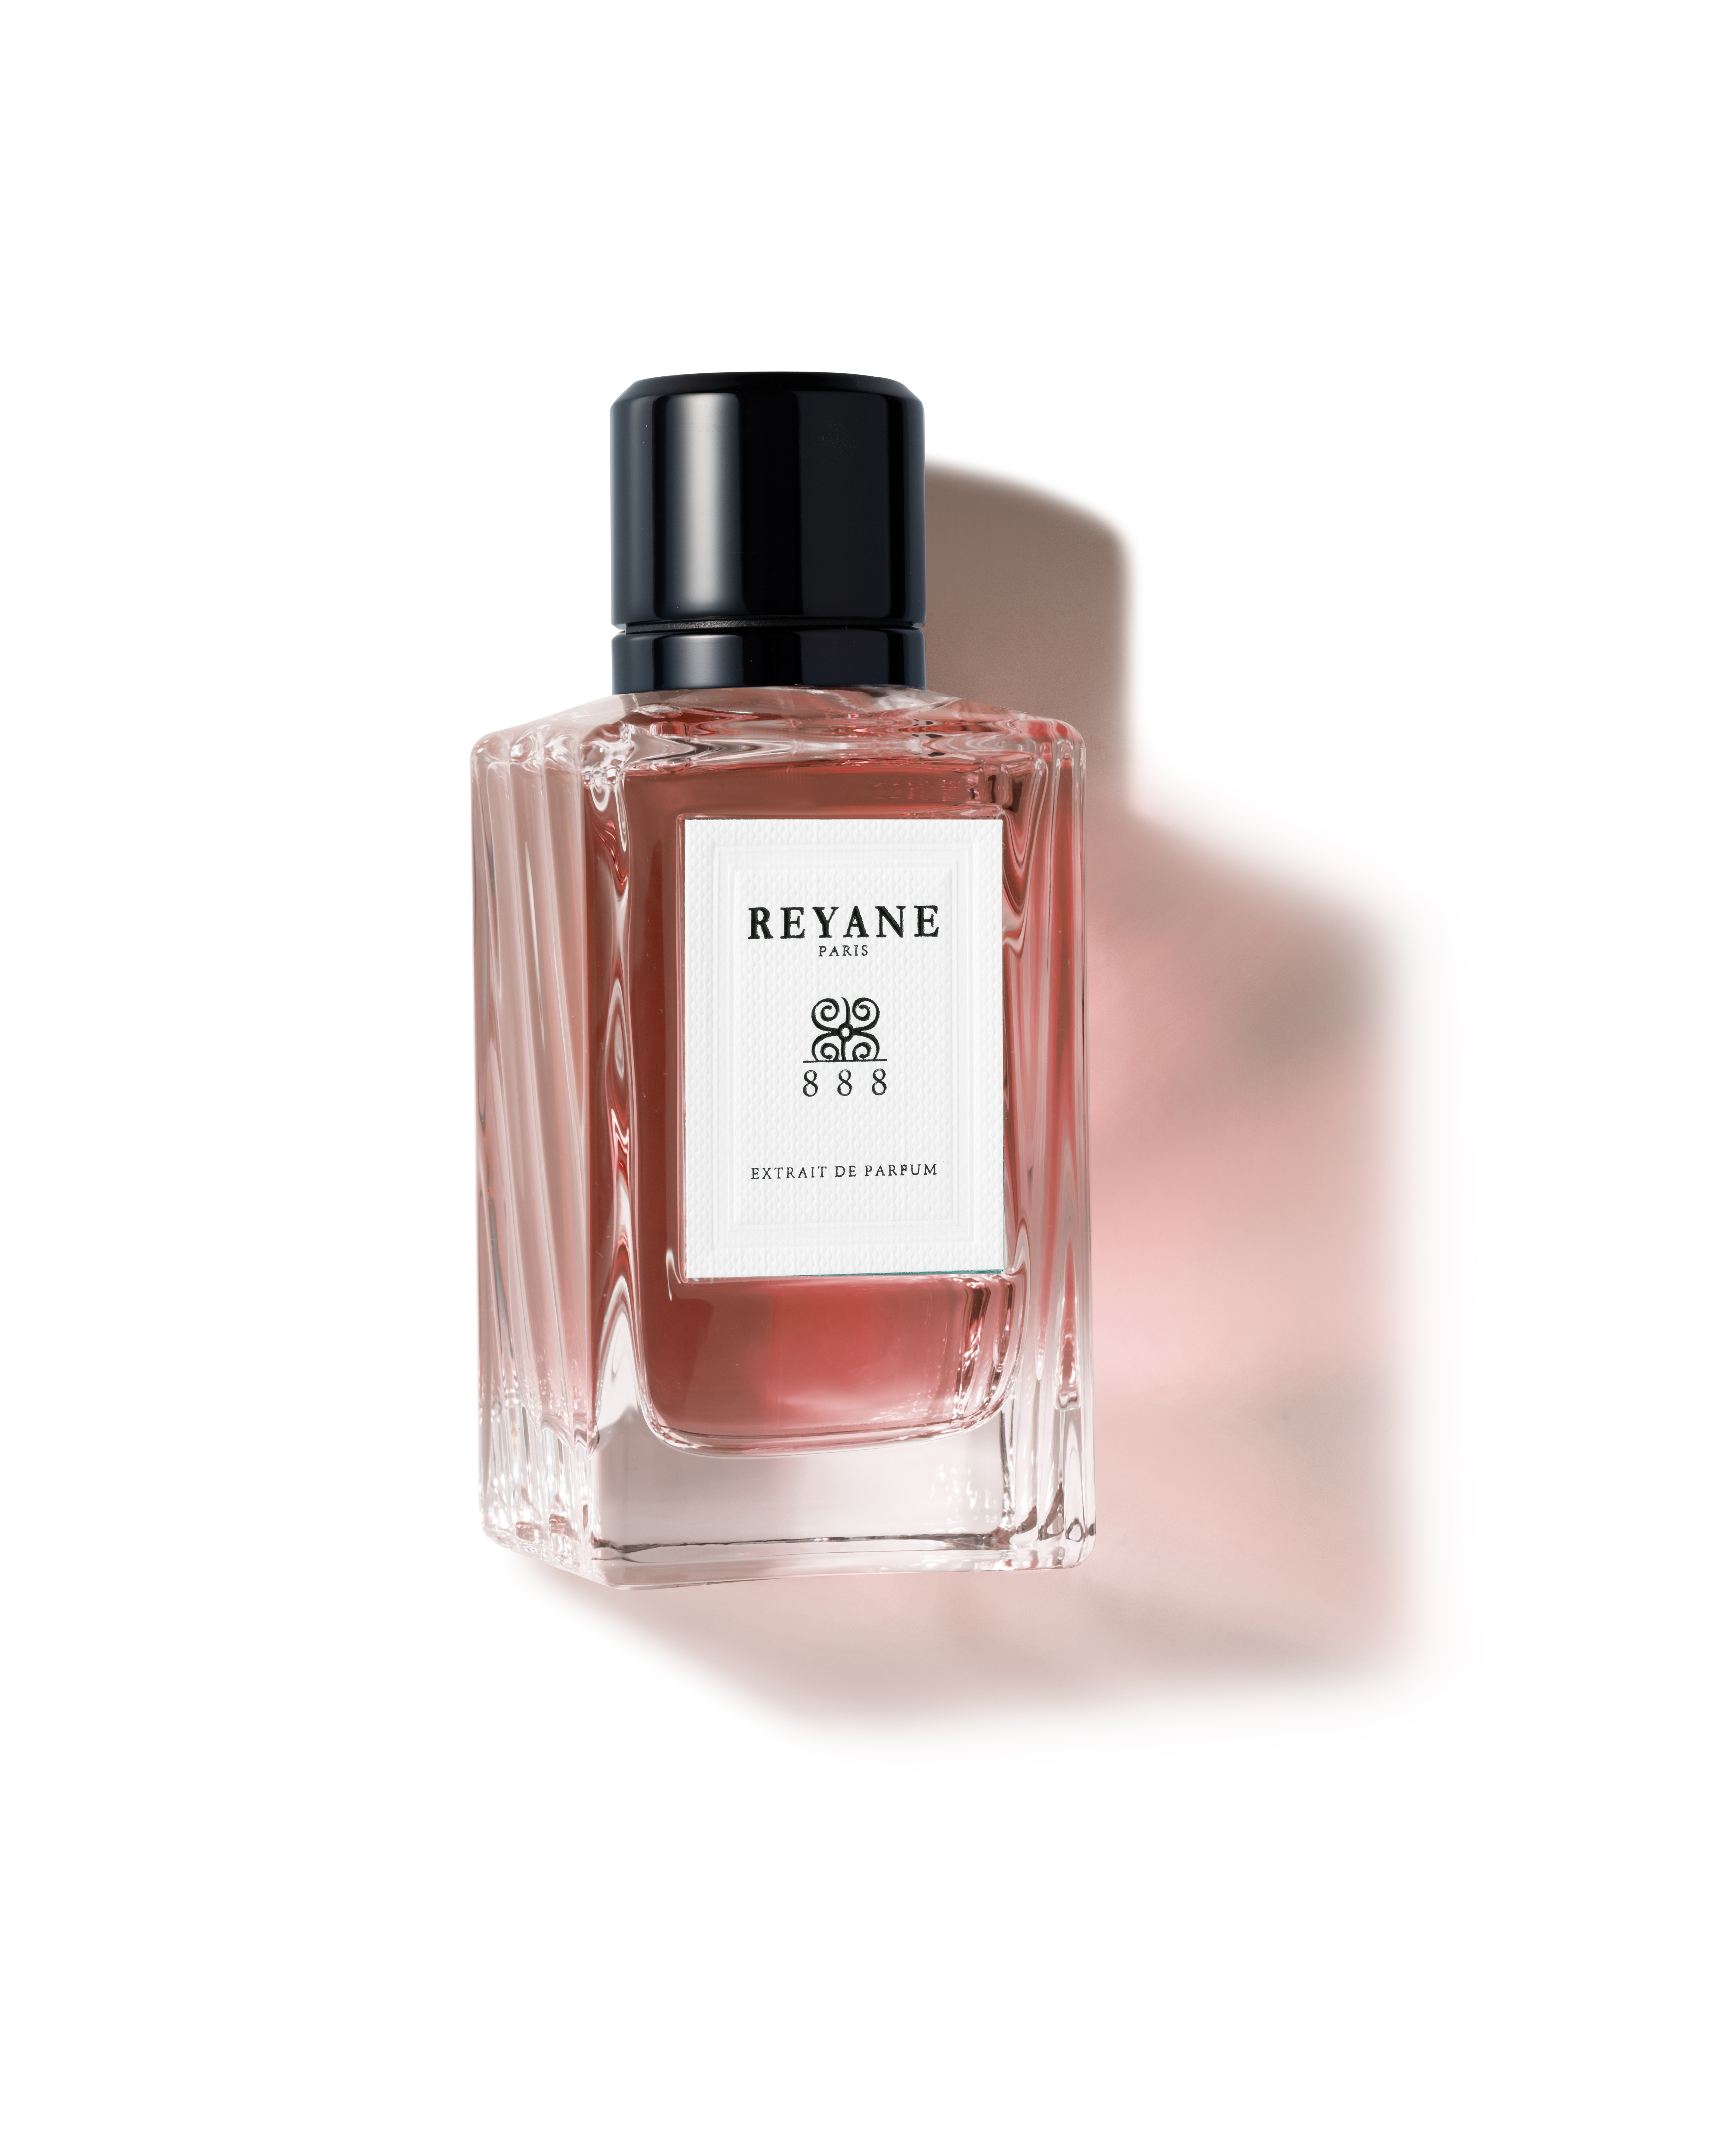 REYANE - 888 Extrait de Parfum 100ml